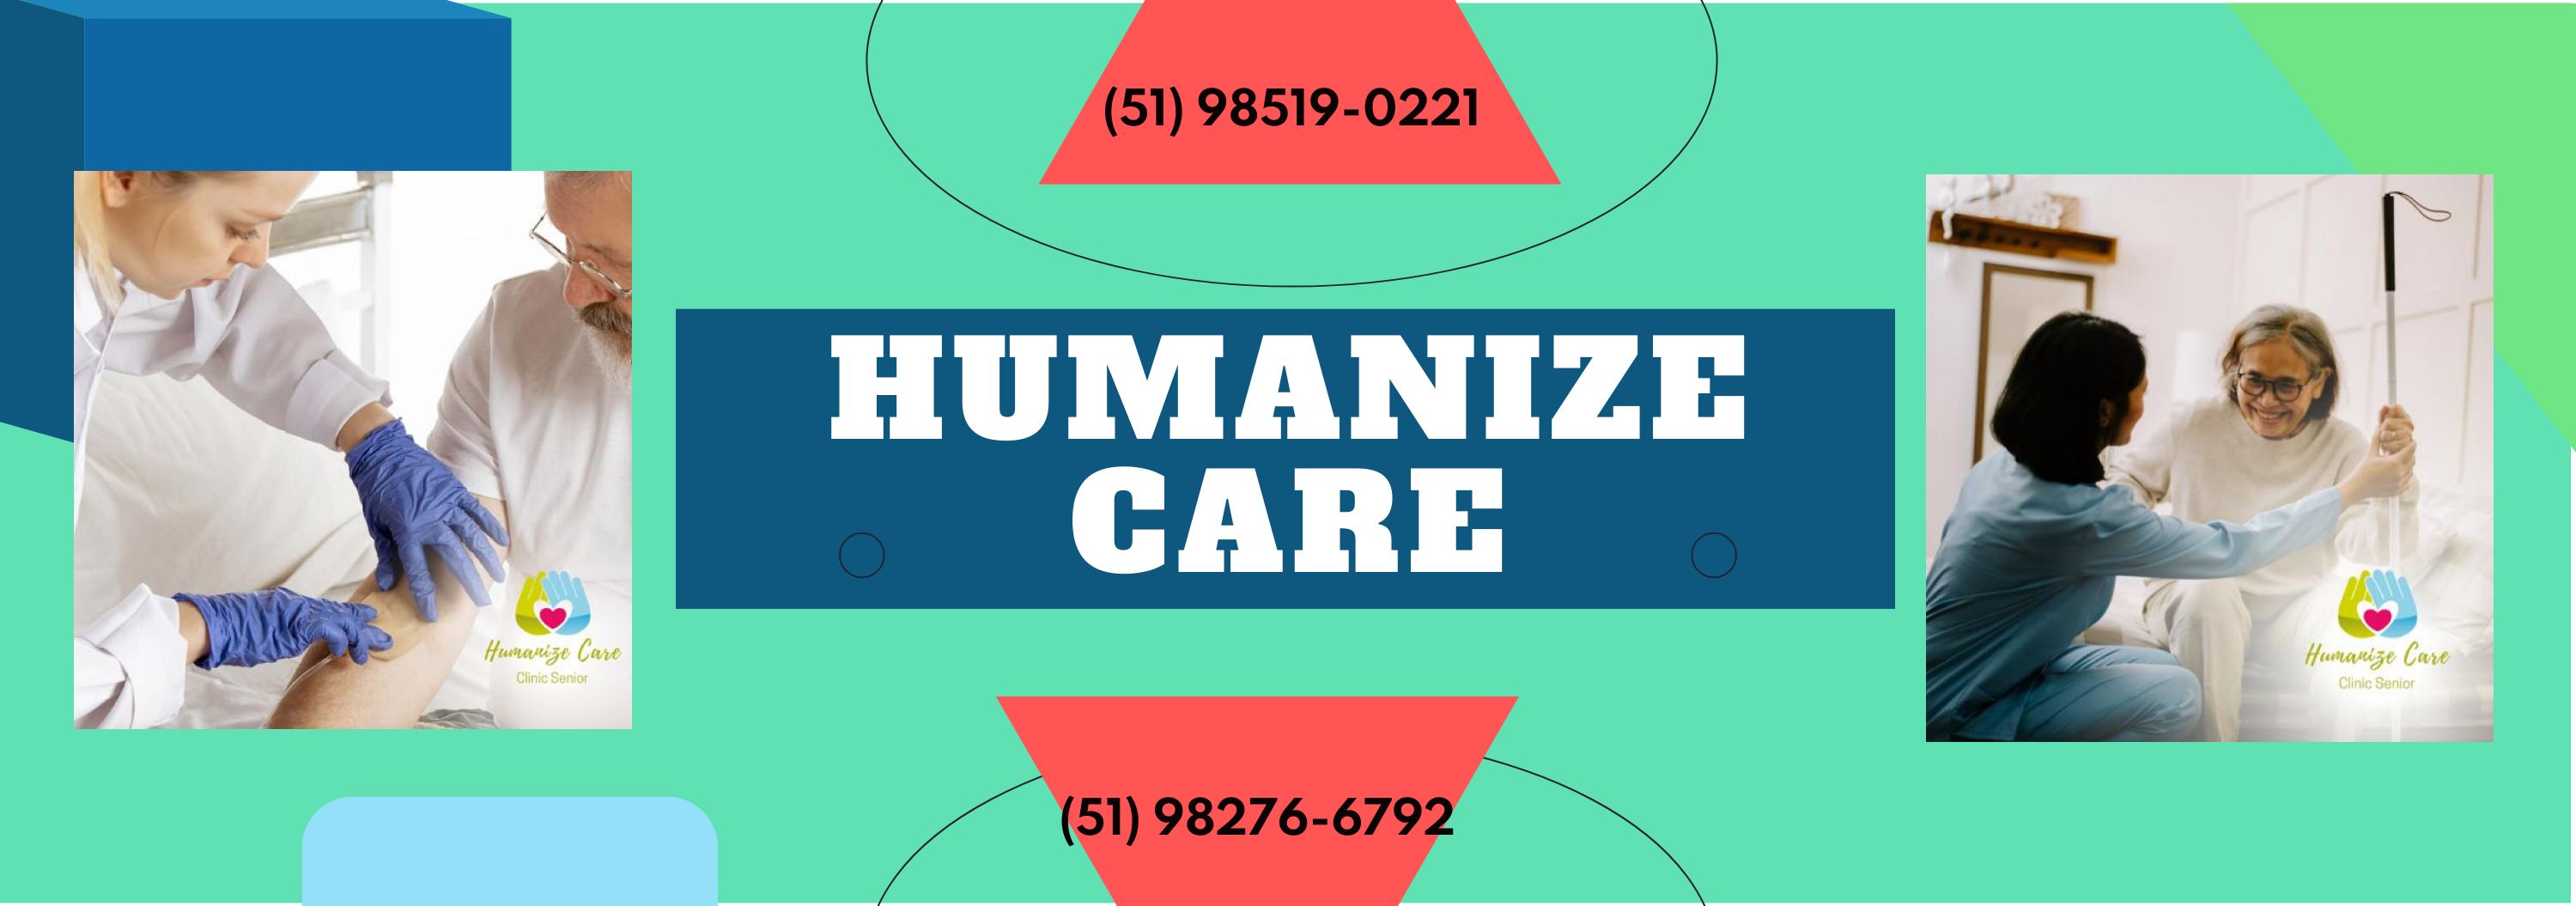 humanizecare-banner2